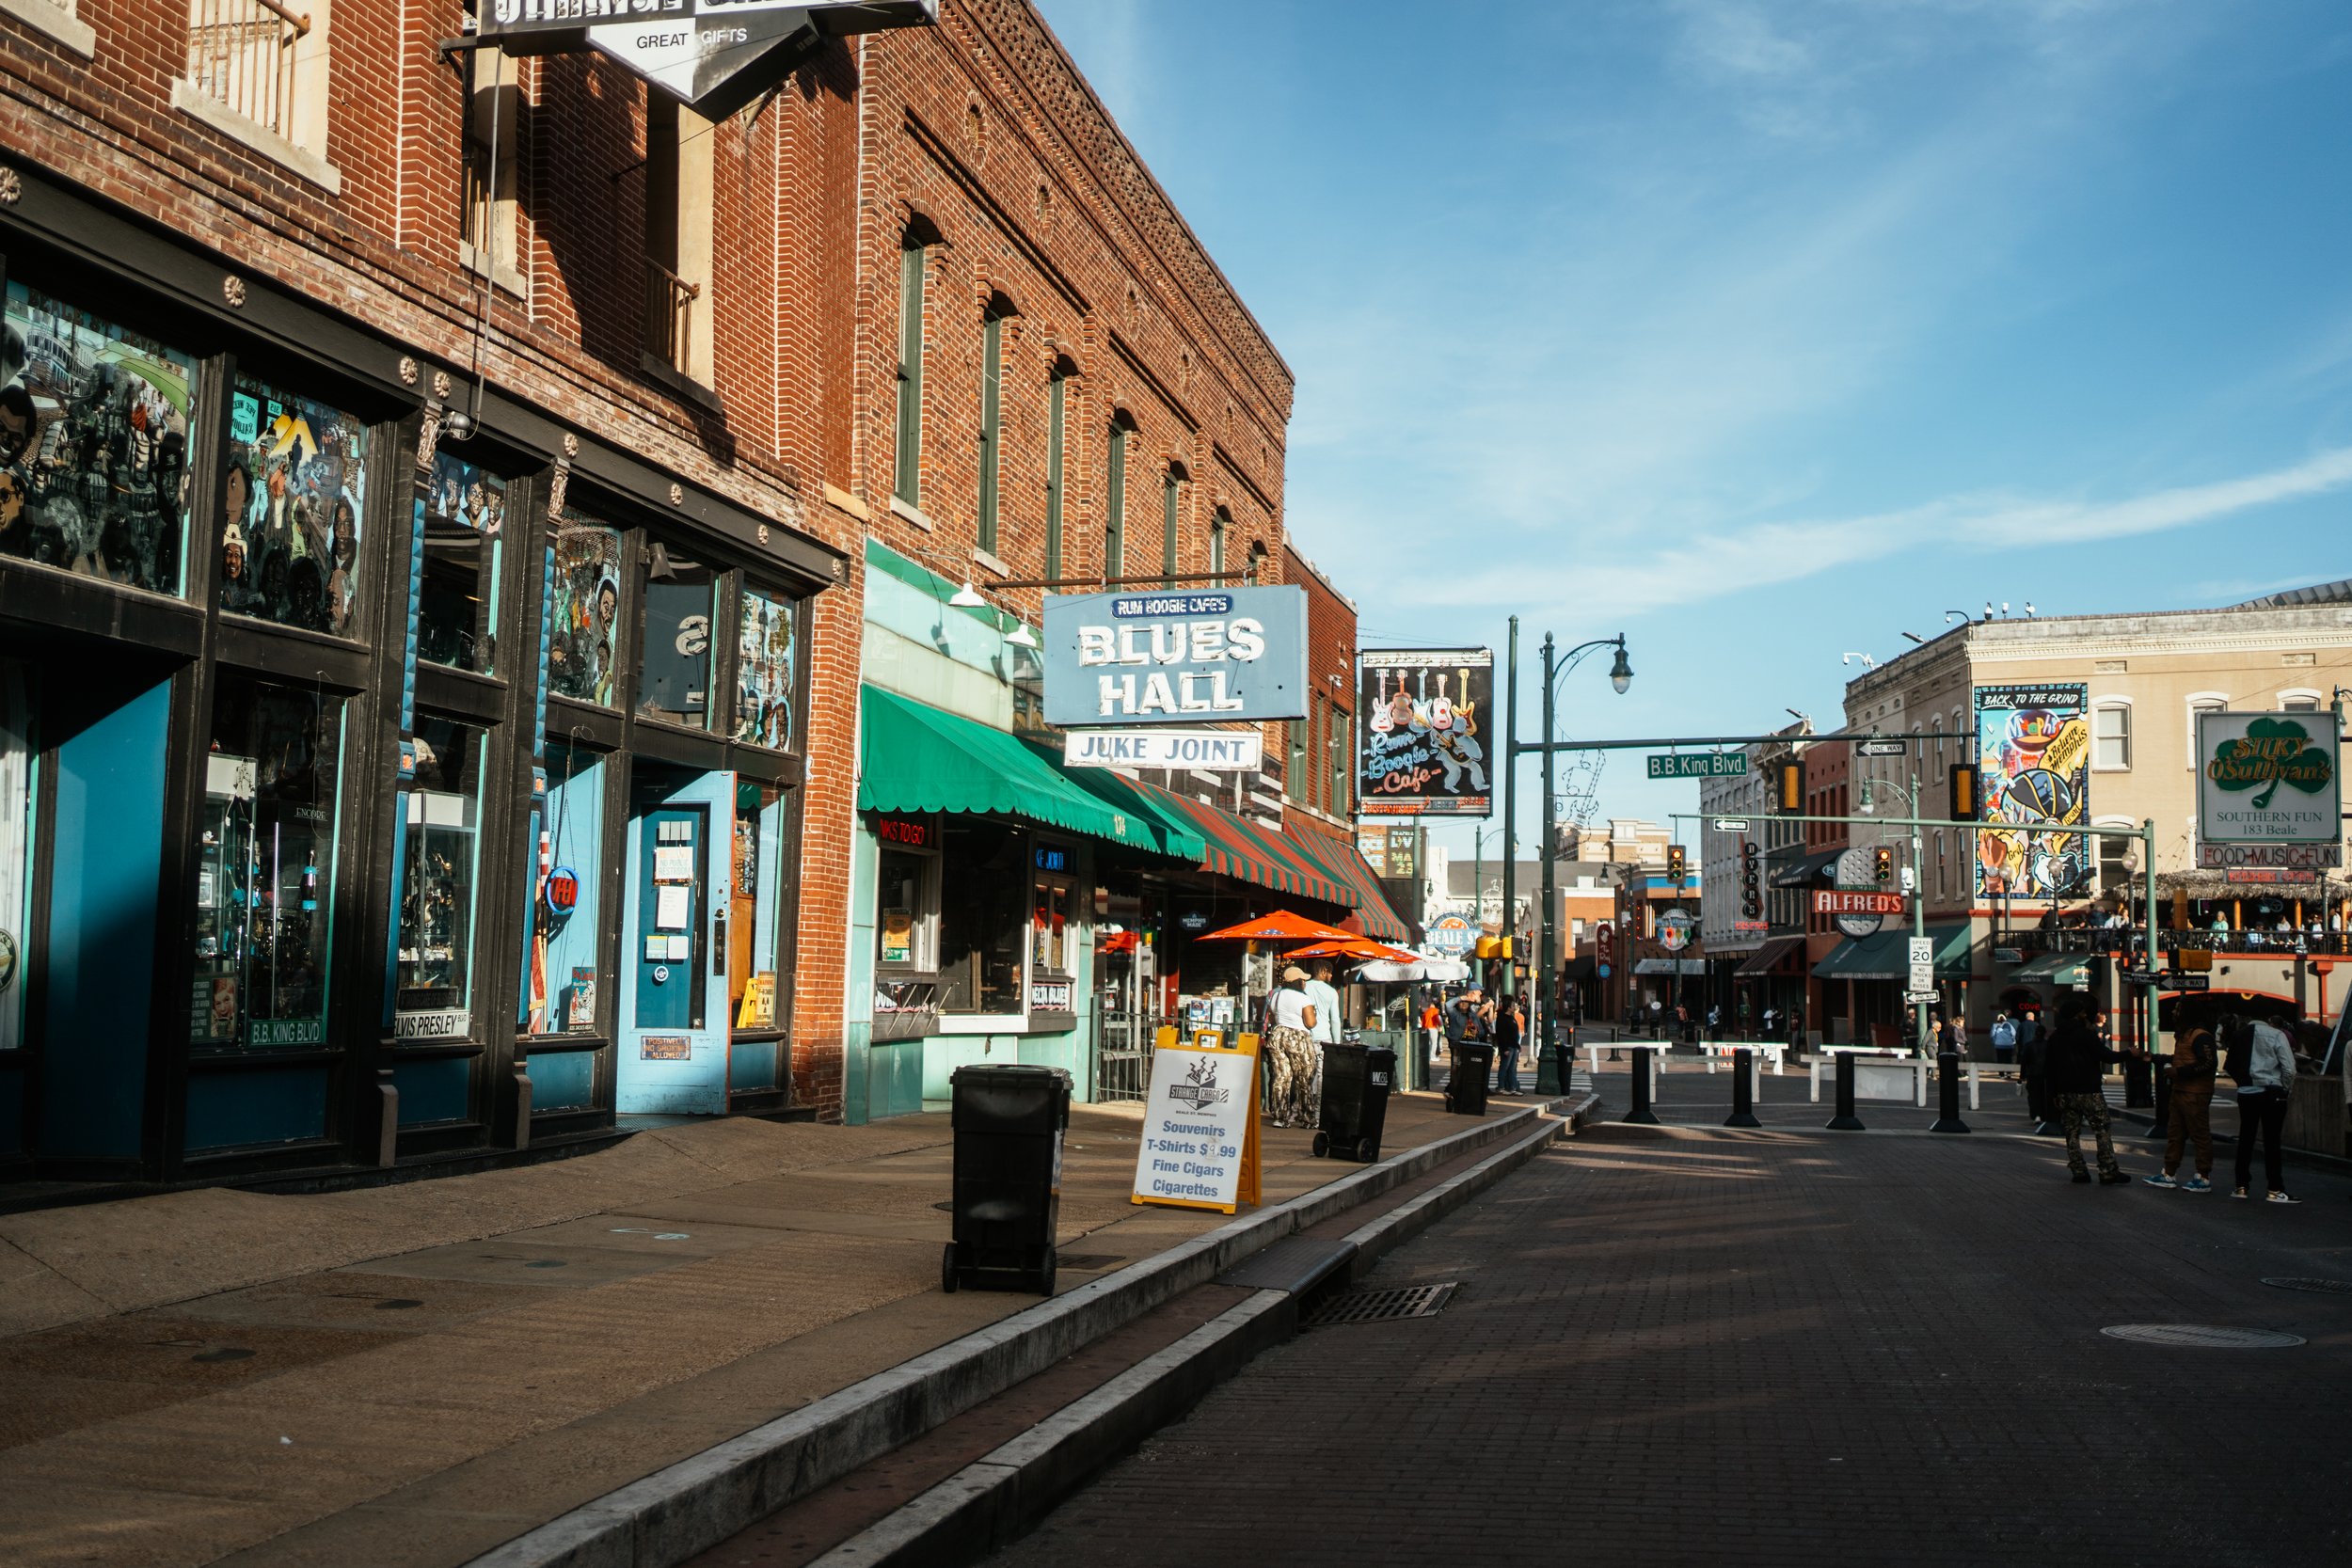 Beale Street in Memphis showing it's blues history